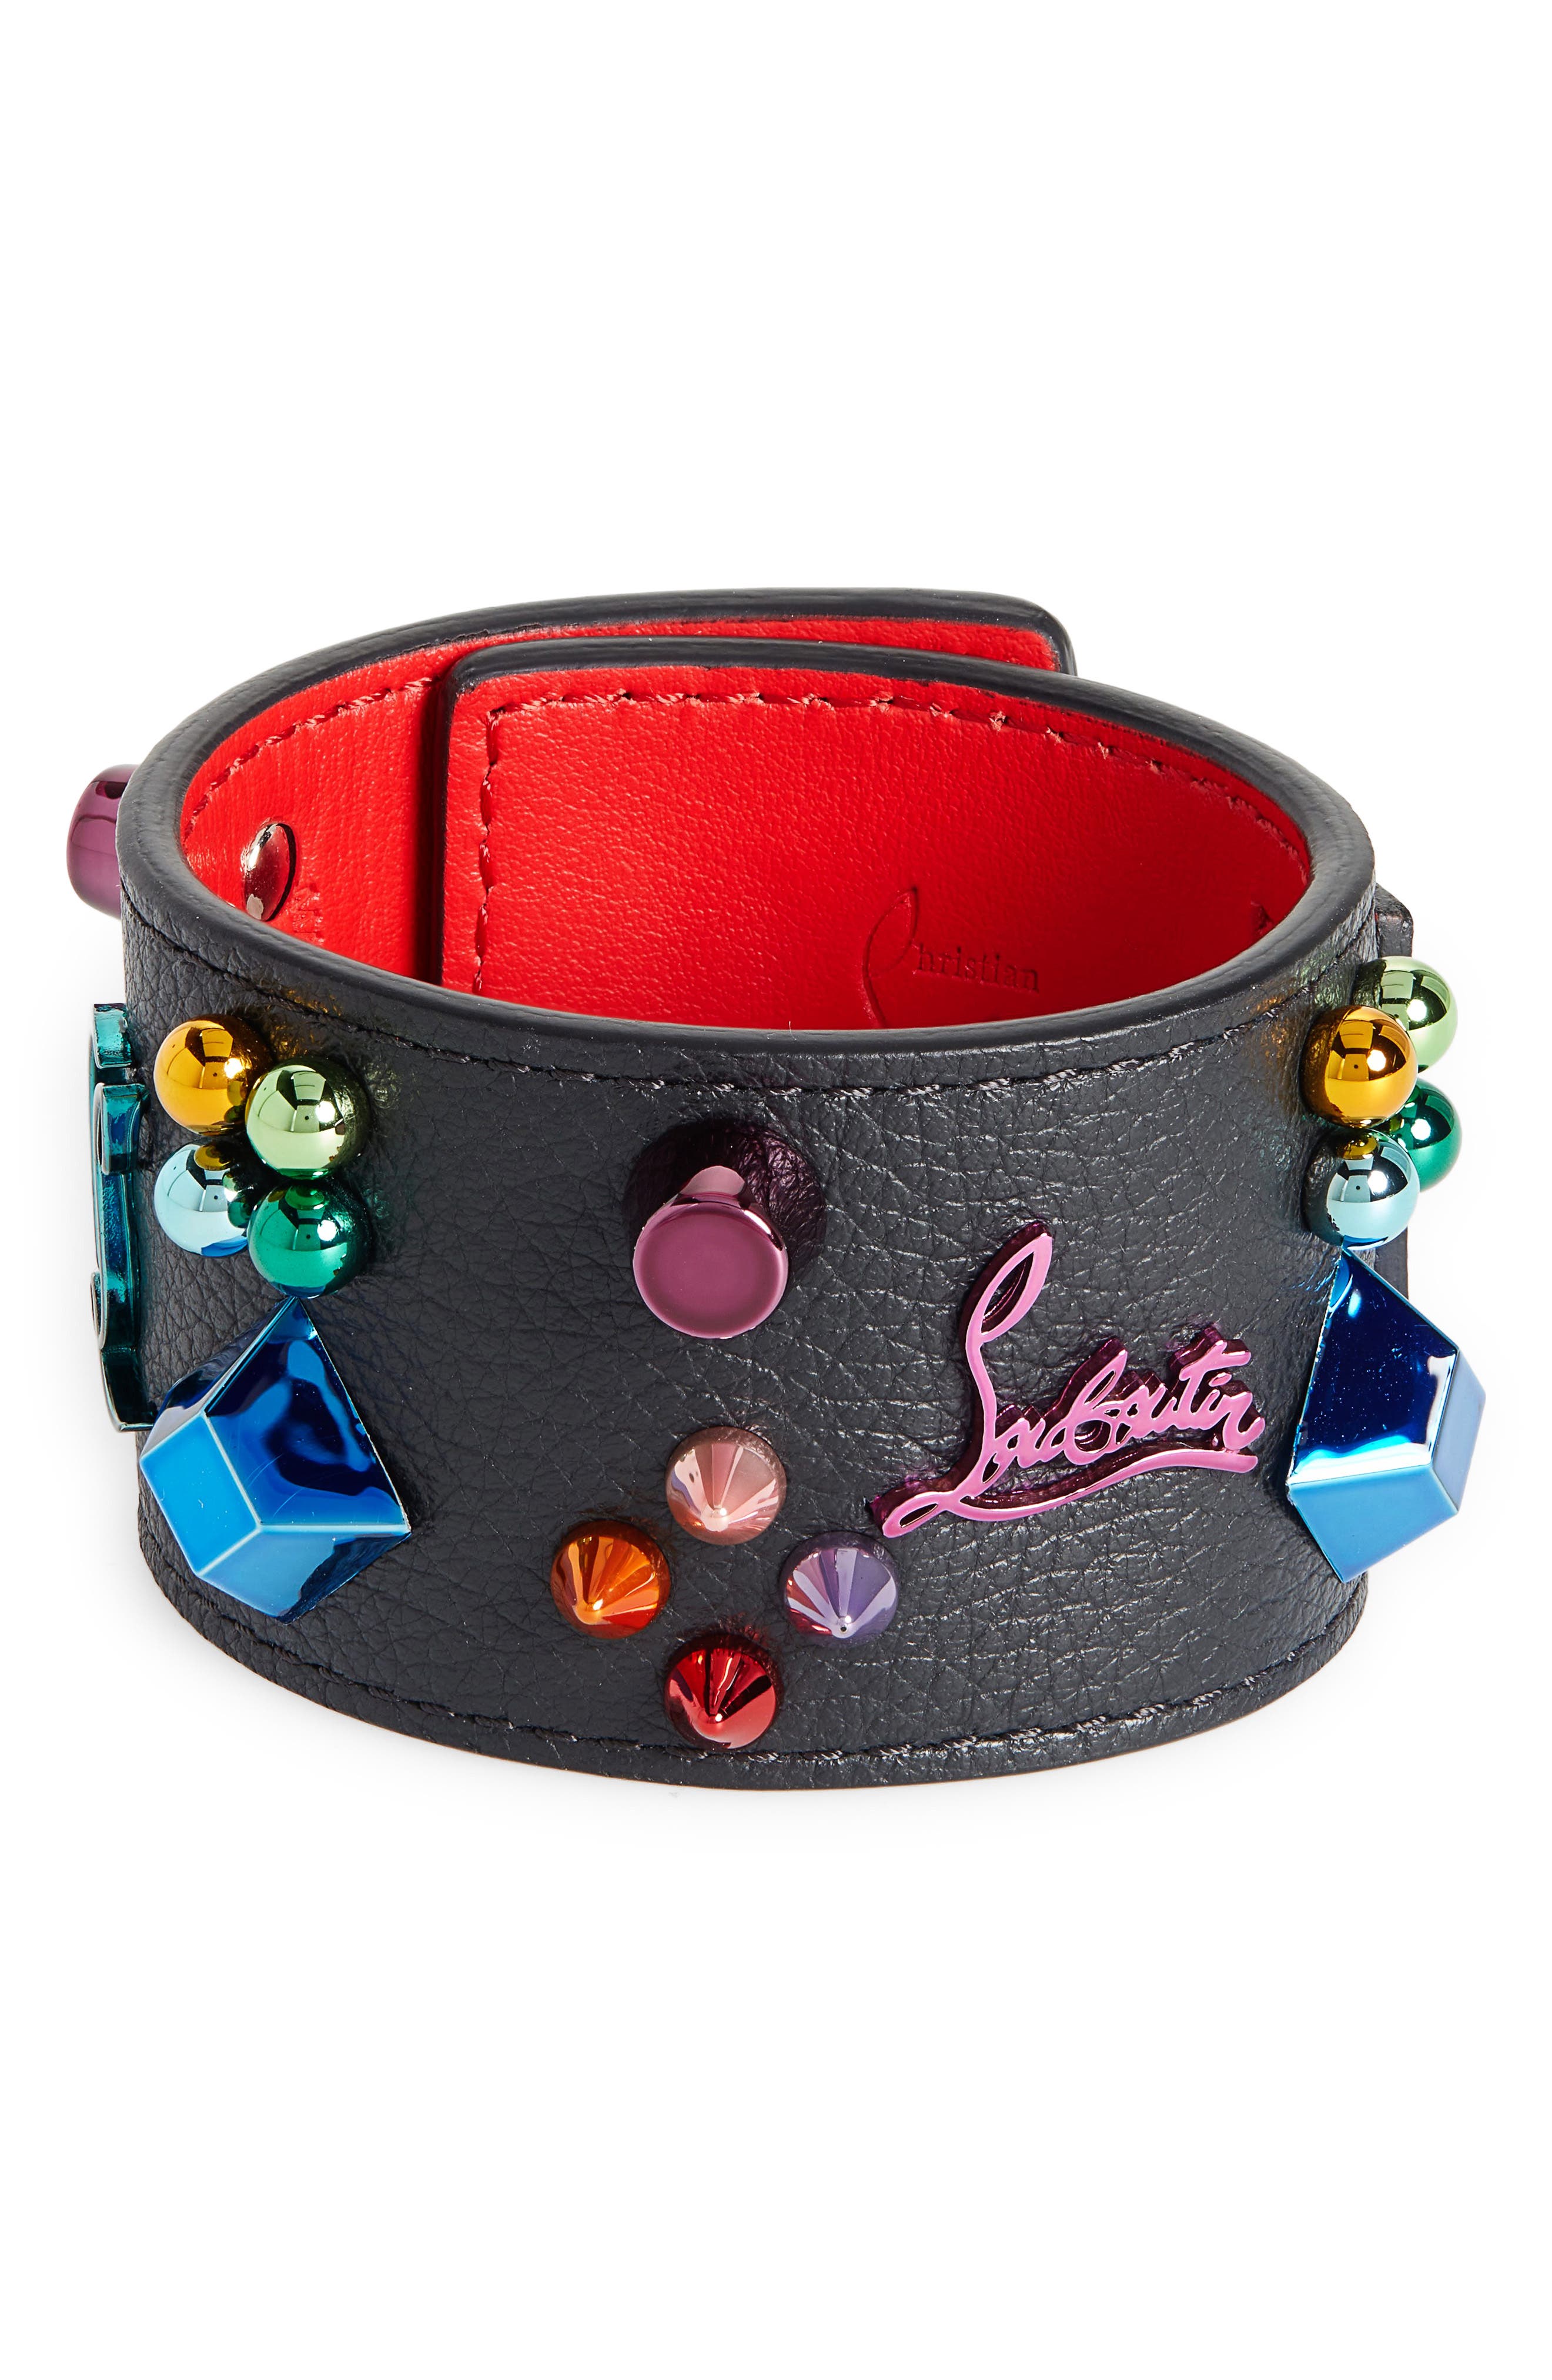 Christian Louboutin Carasky Studded Leather Cuff Bracelet in Black/Multi at Nordstrom